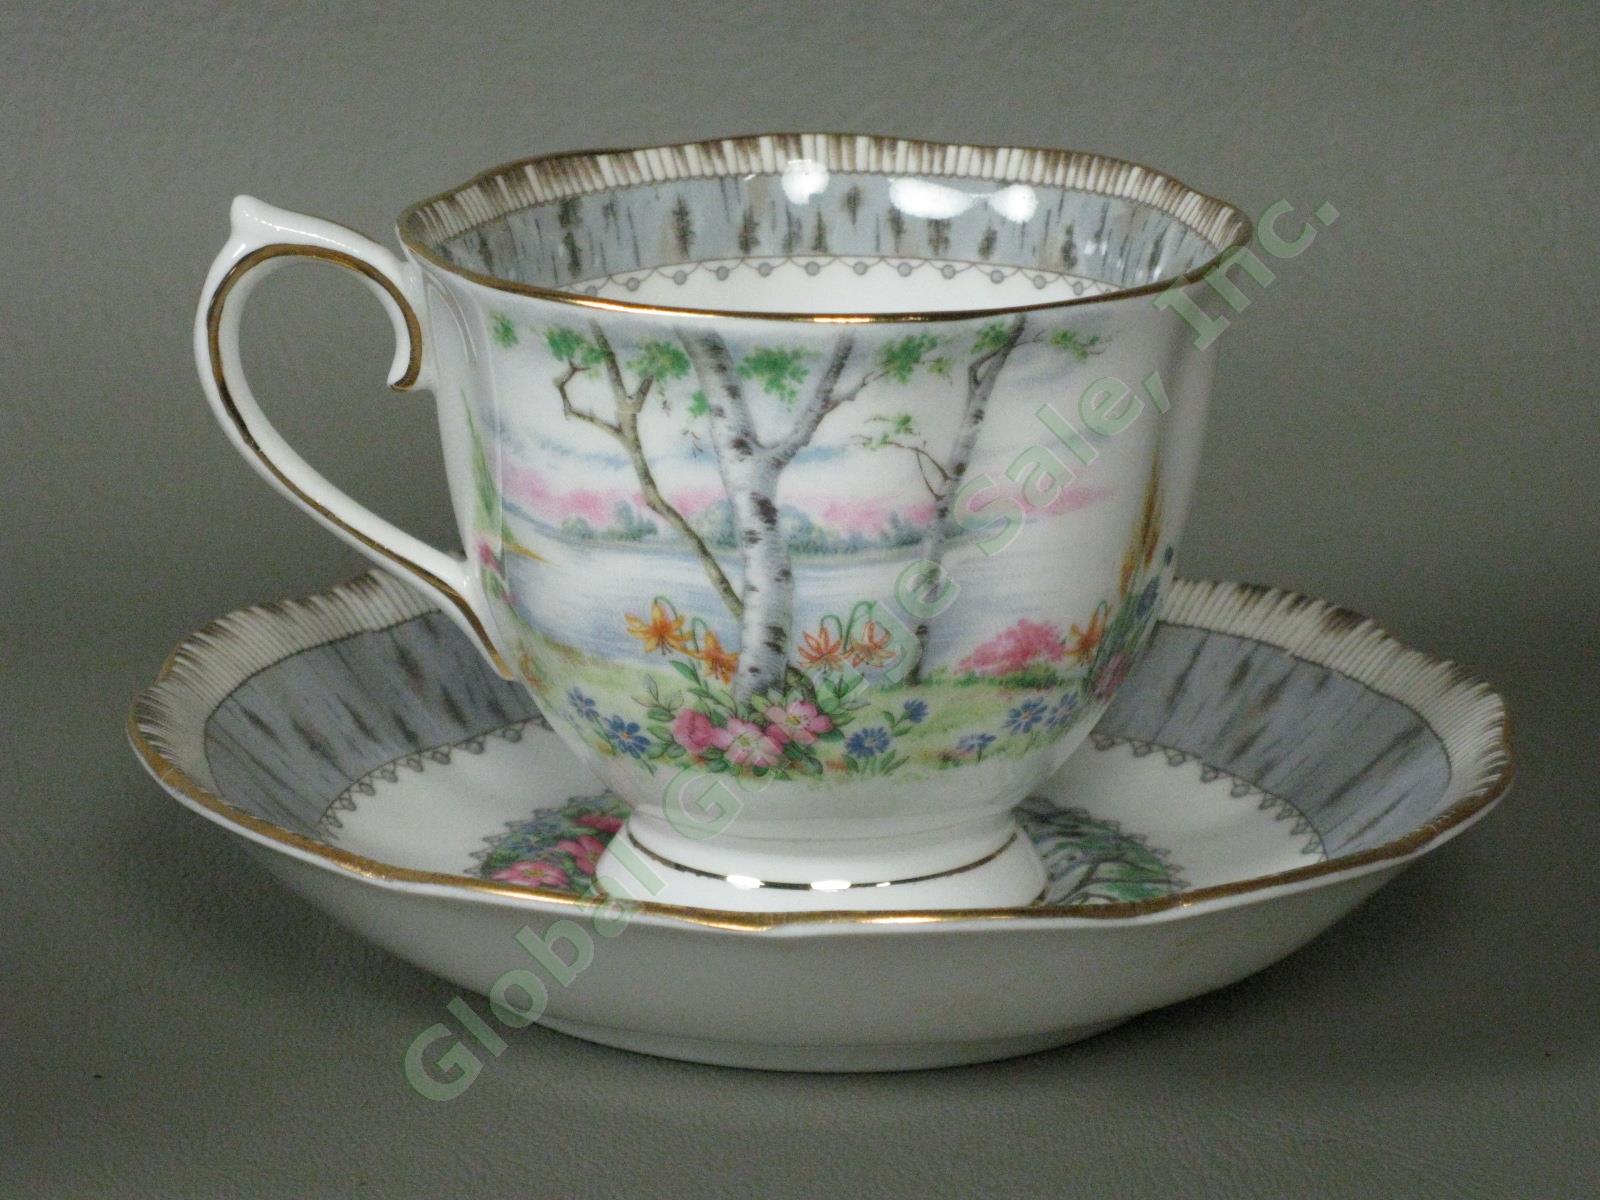 8 Vintage Royal Albert Silver Birch Bone China Teacups Tea Cups + Saucers Set NR 3